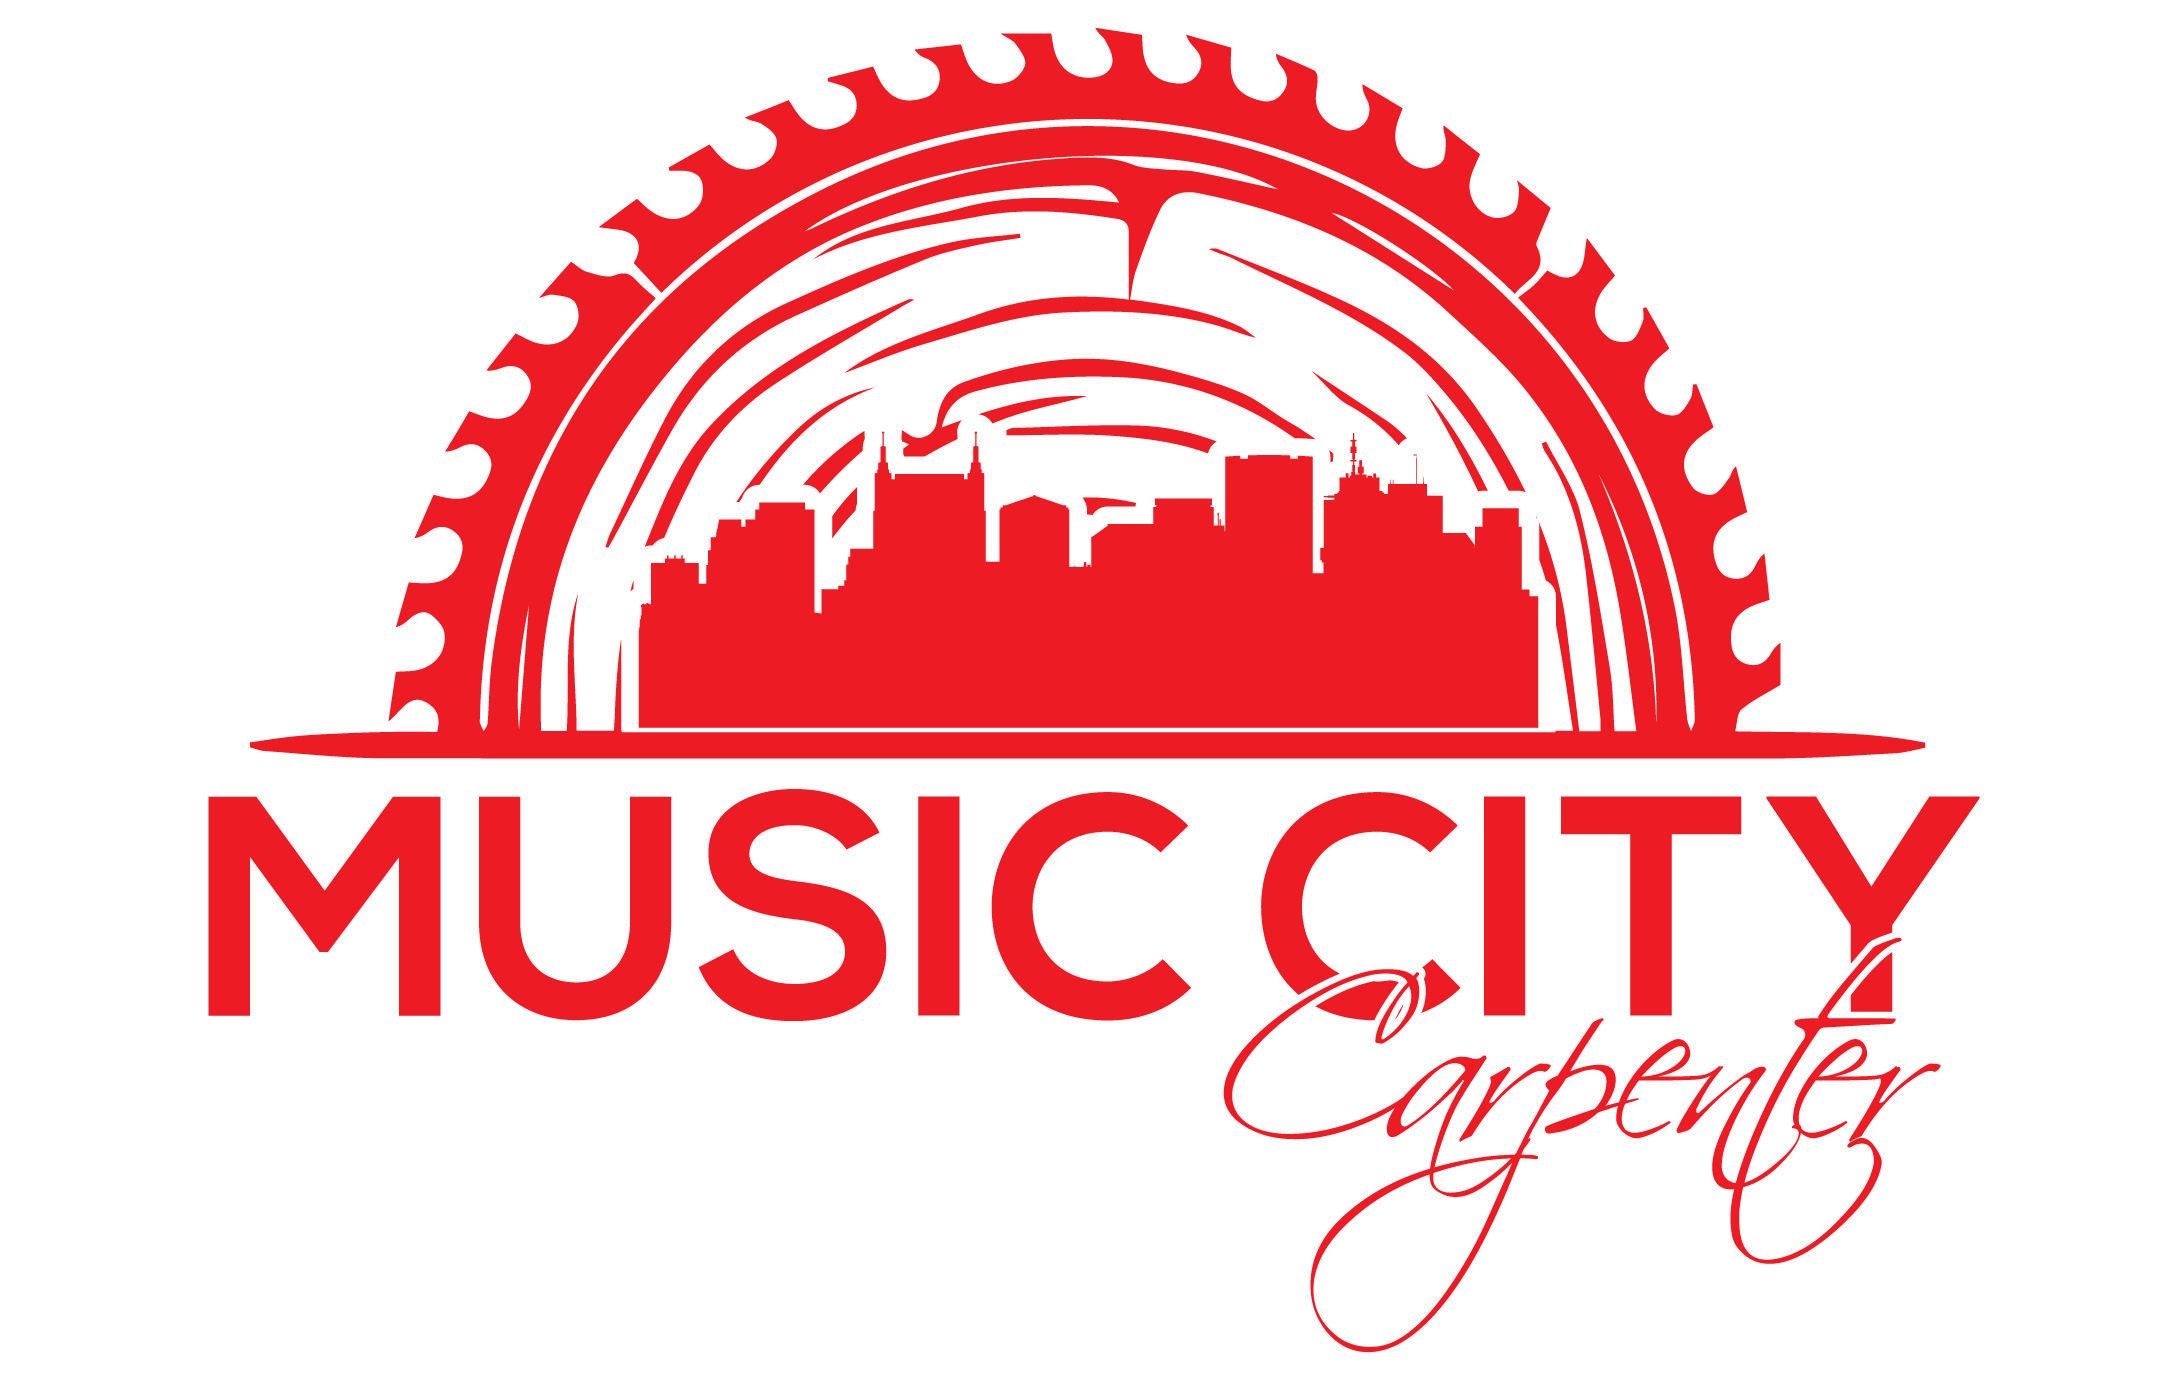 Music-City-Carpenter-01